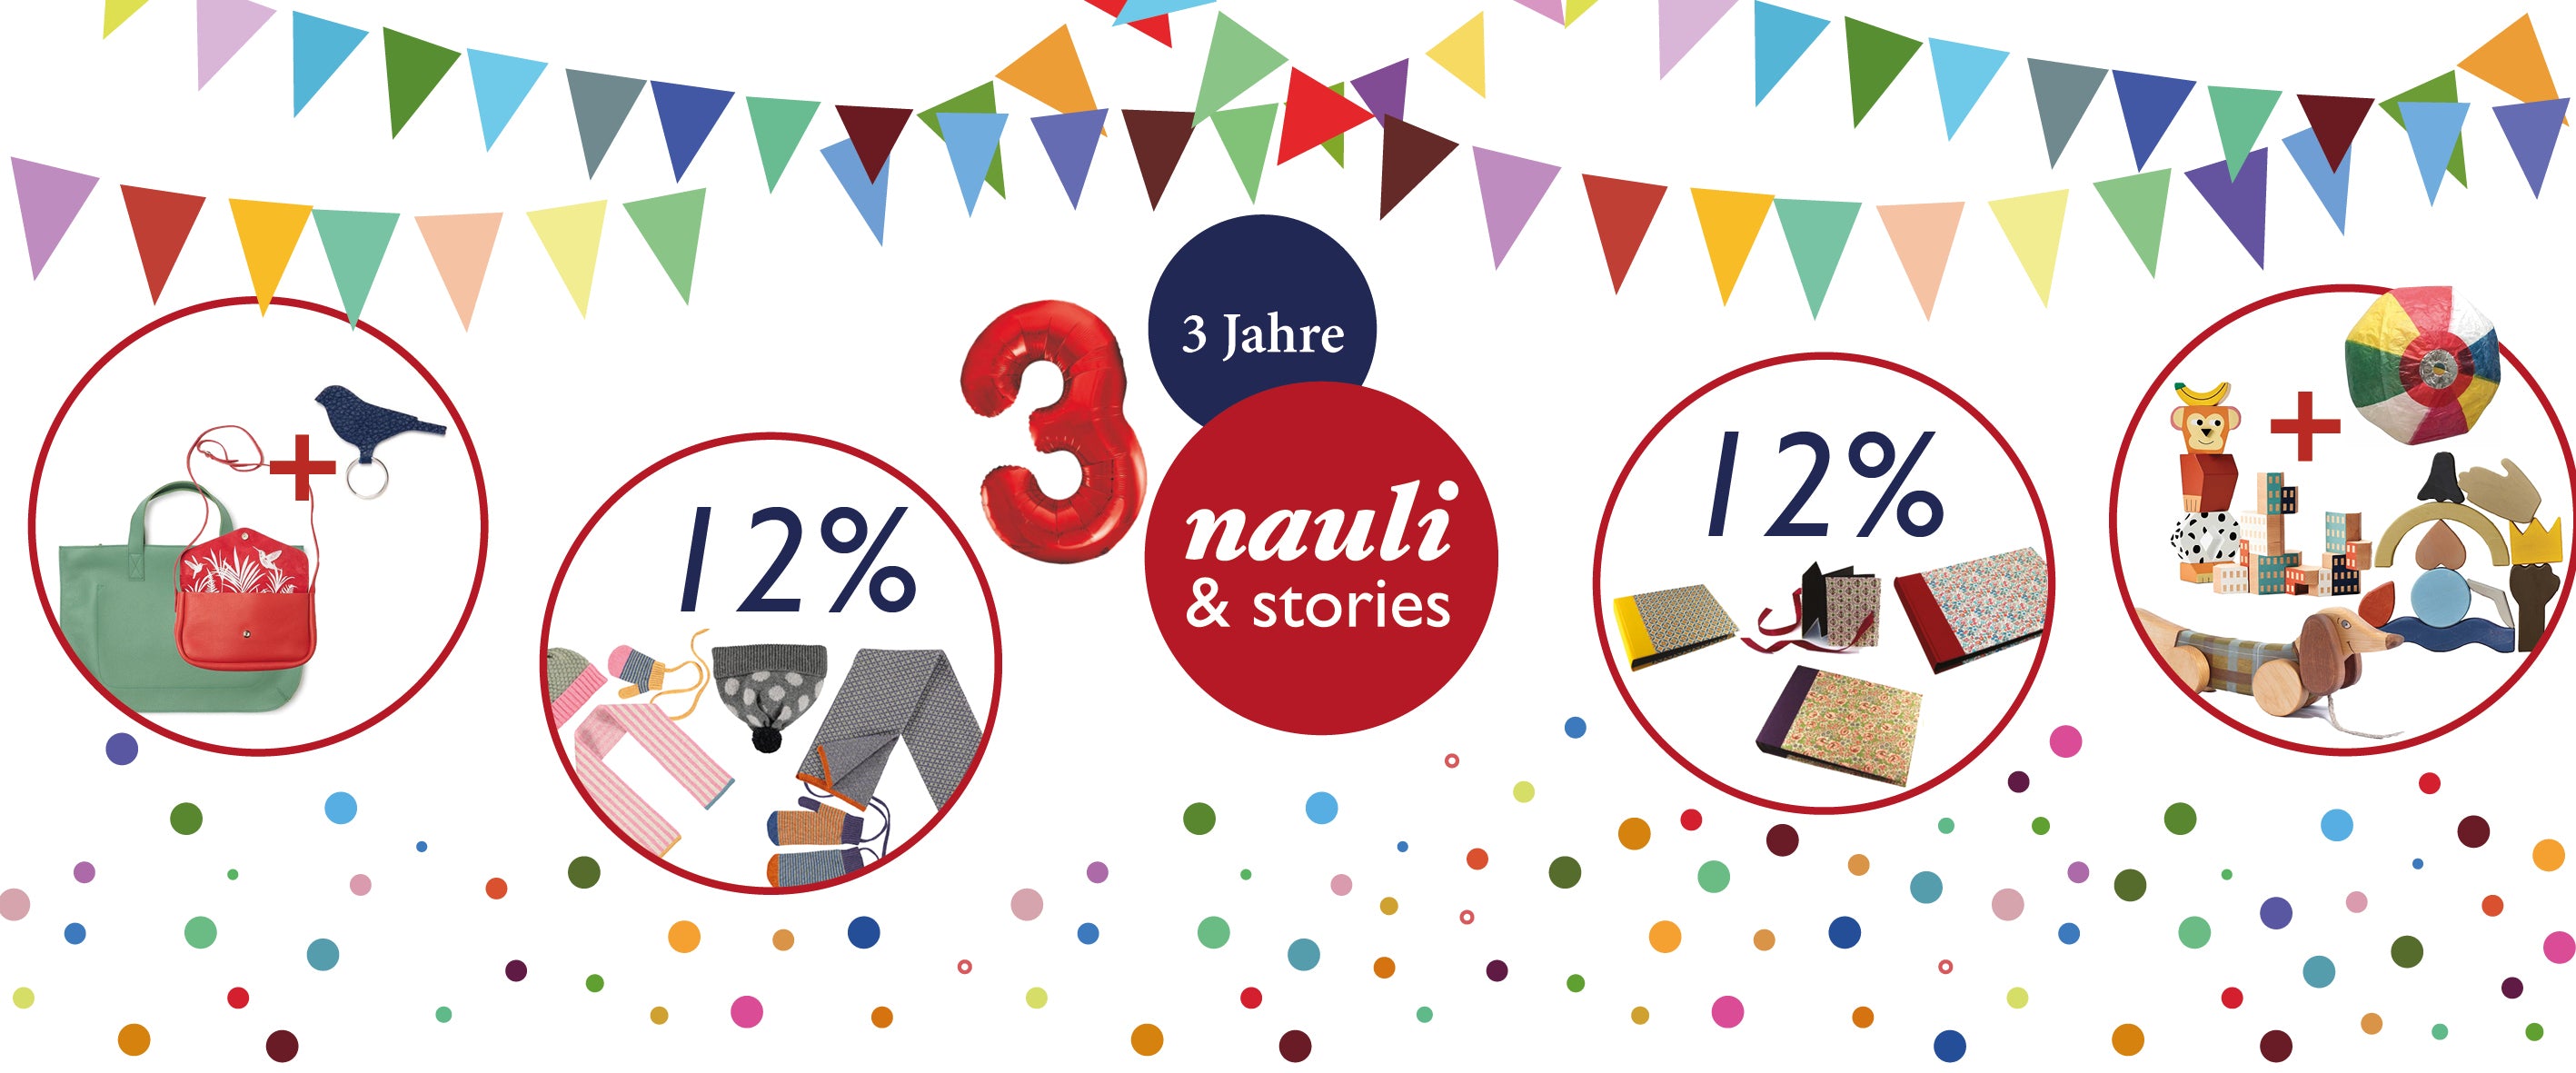 Nauli & Stories in Maxvorstadt in Munich is celebrating its 3-year-old birthday!